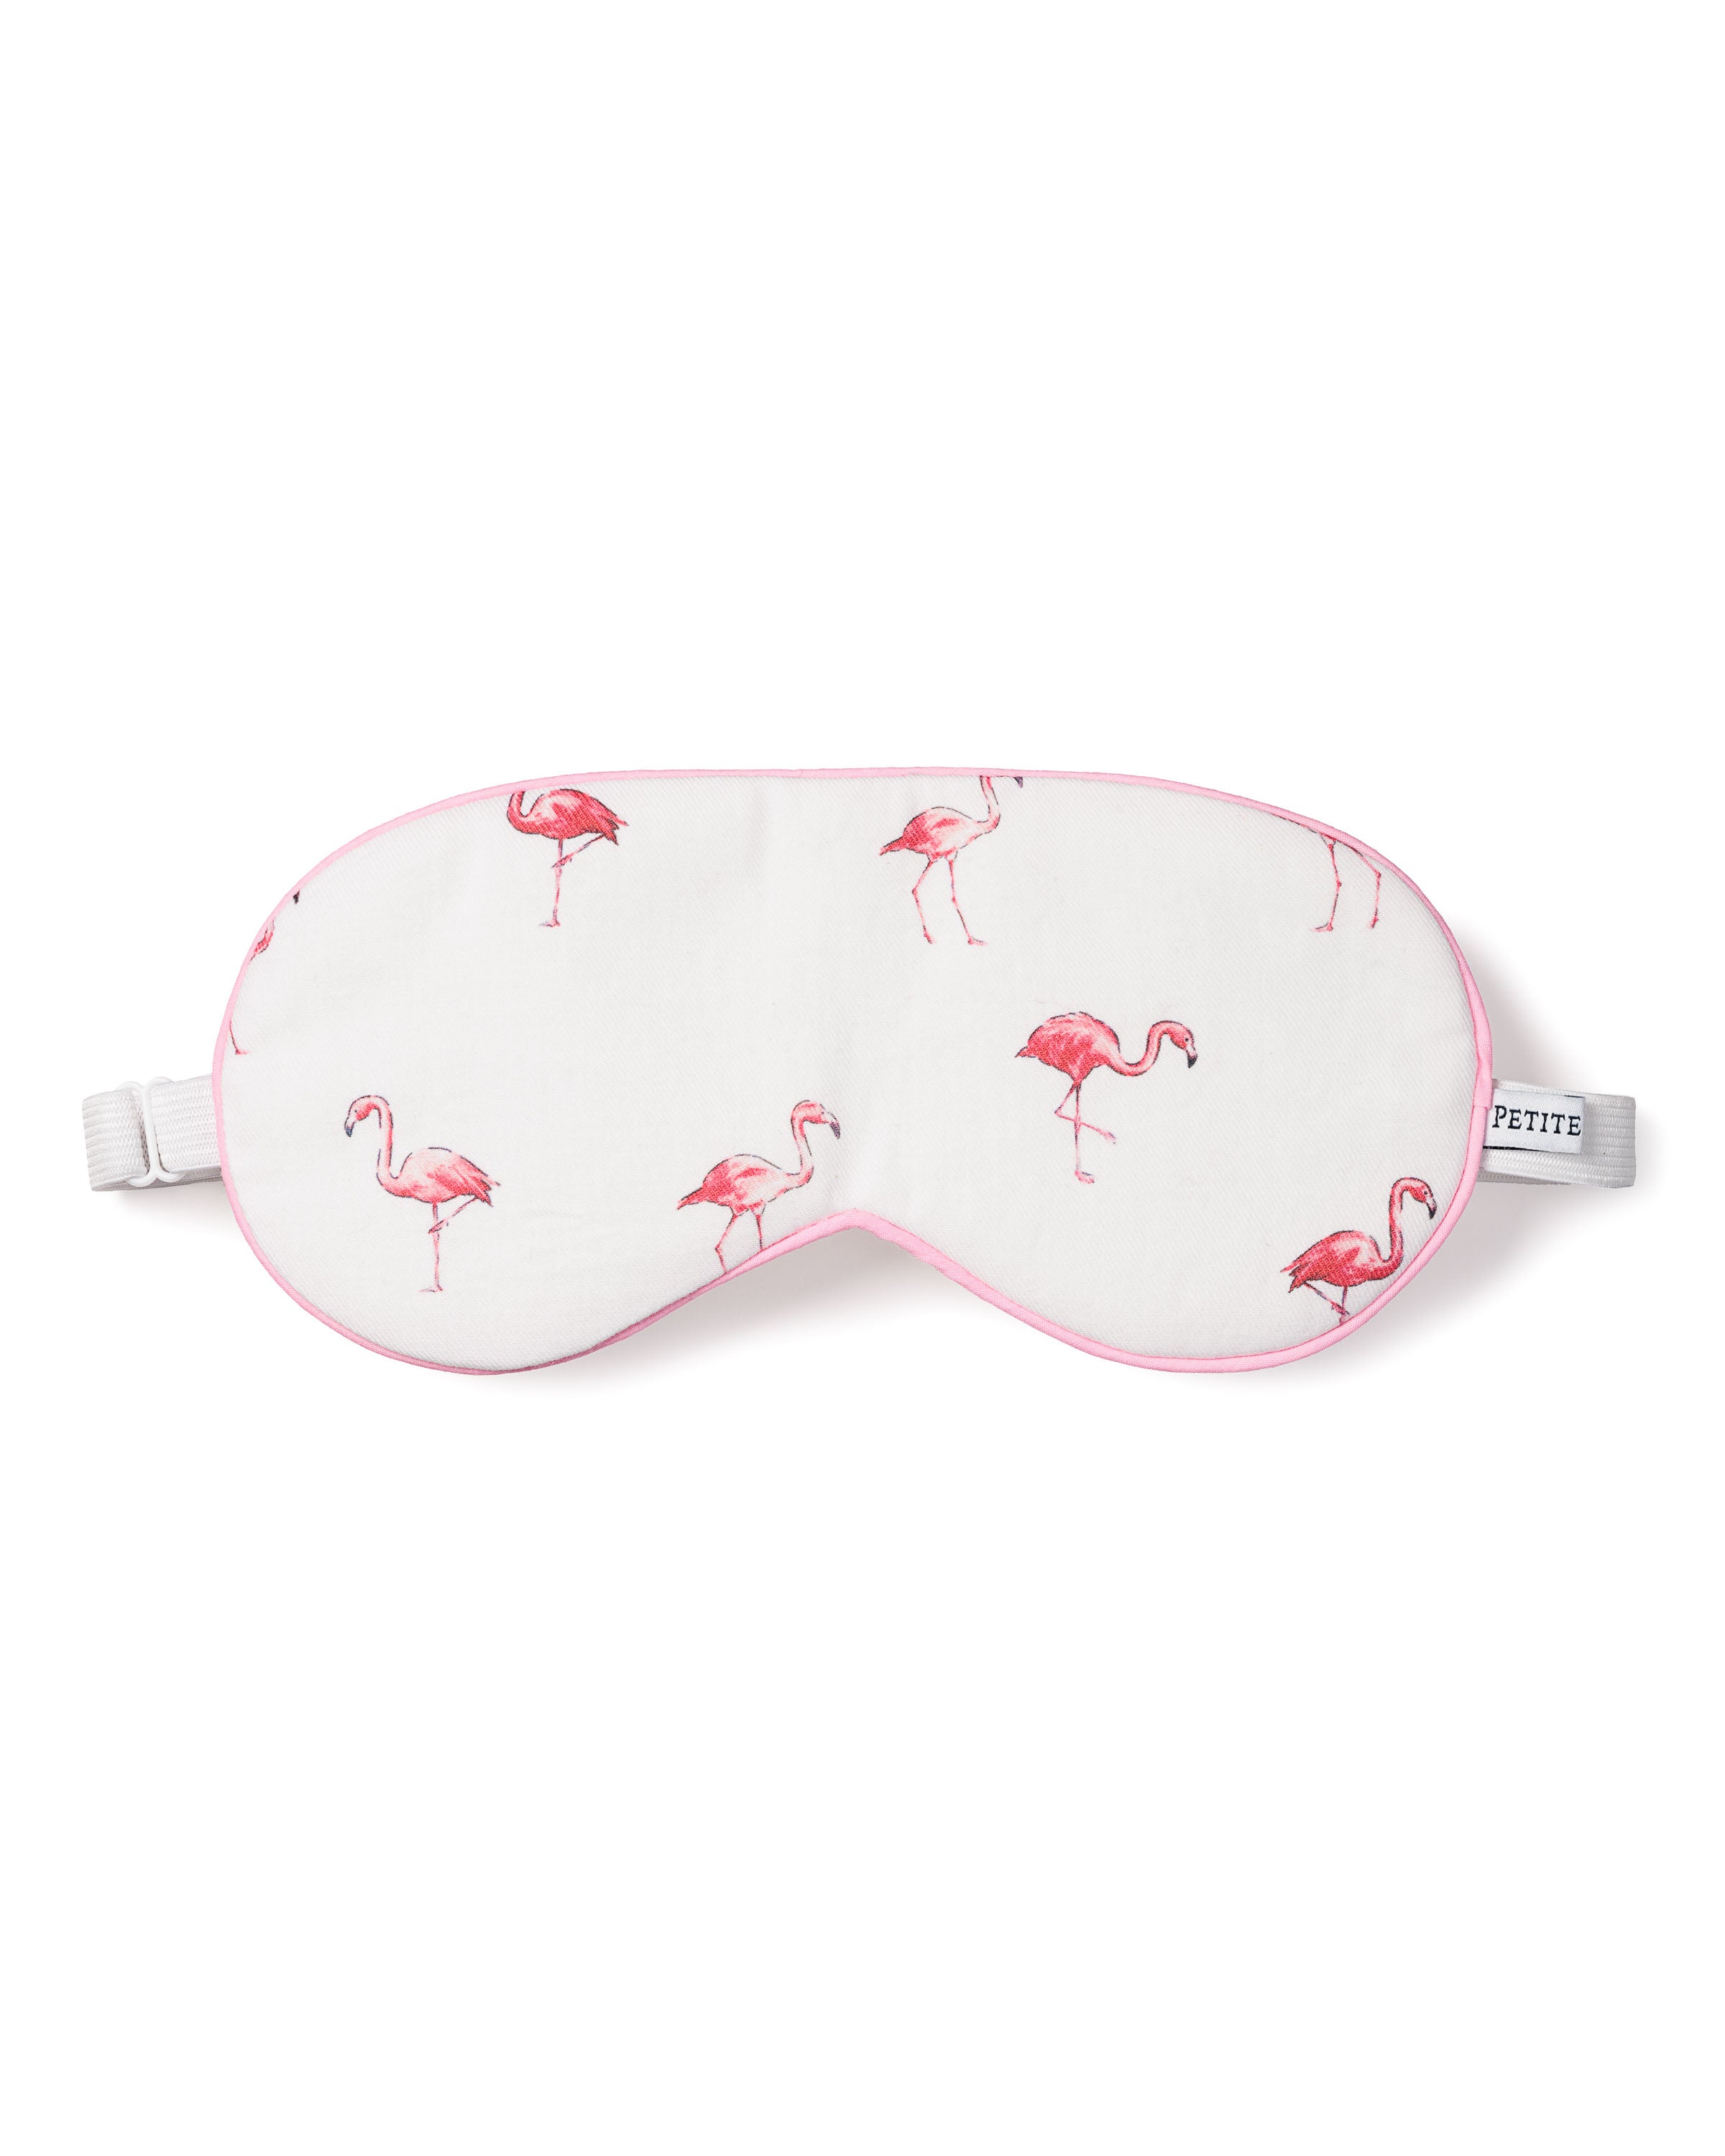 Adult's Sleep Mask in Flamingos